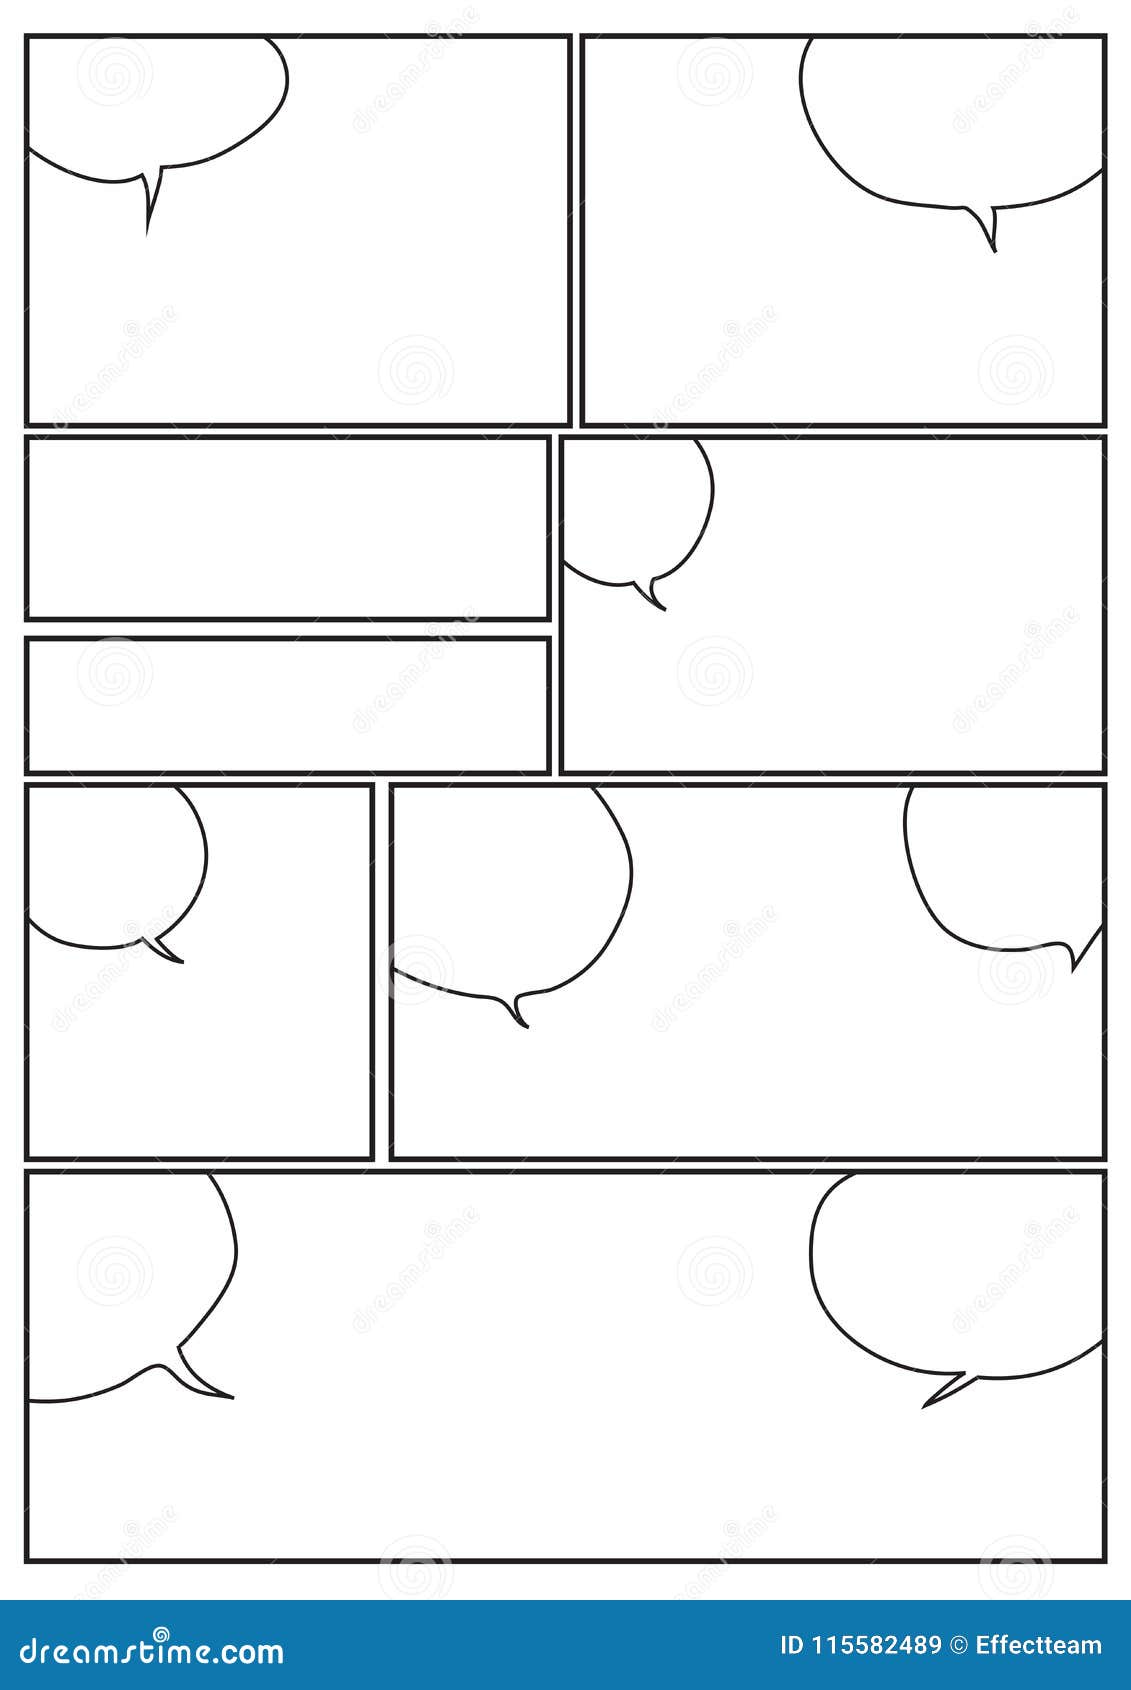 manga storyboard layout with bubbles line